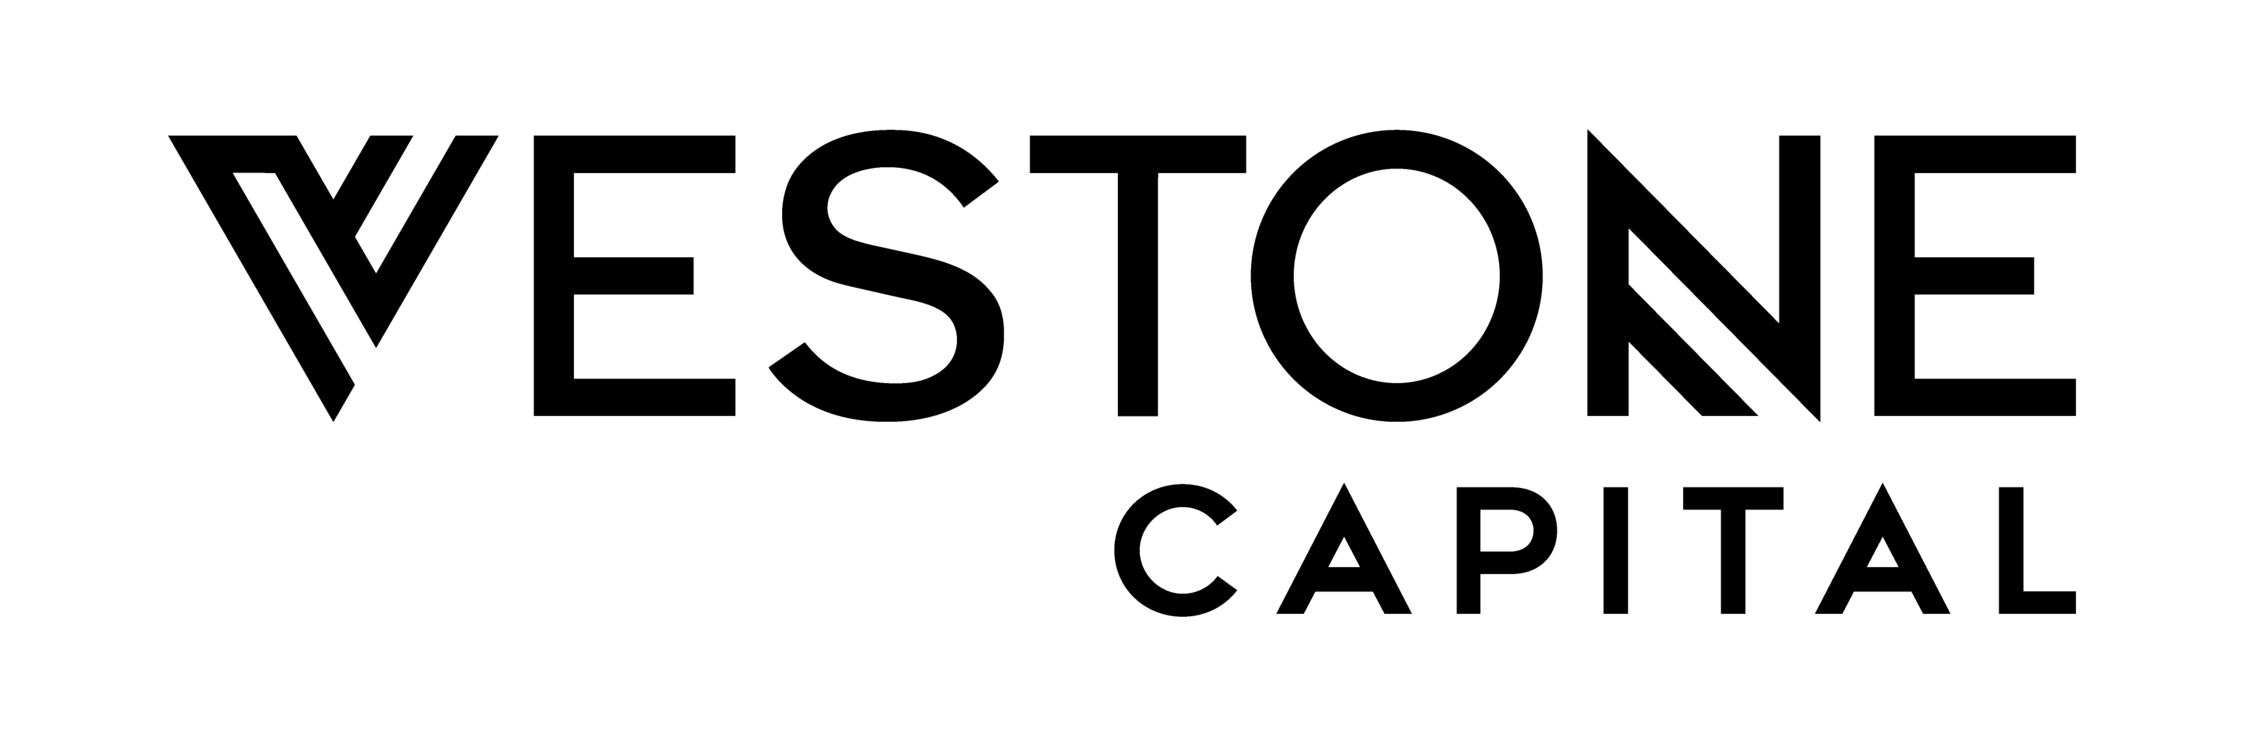 vestone-logo-black